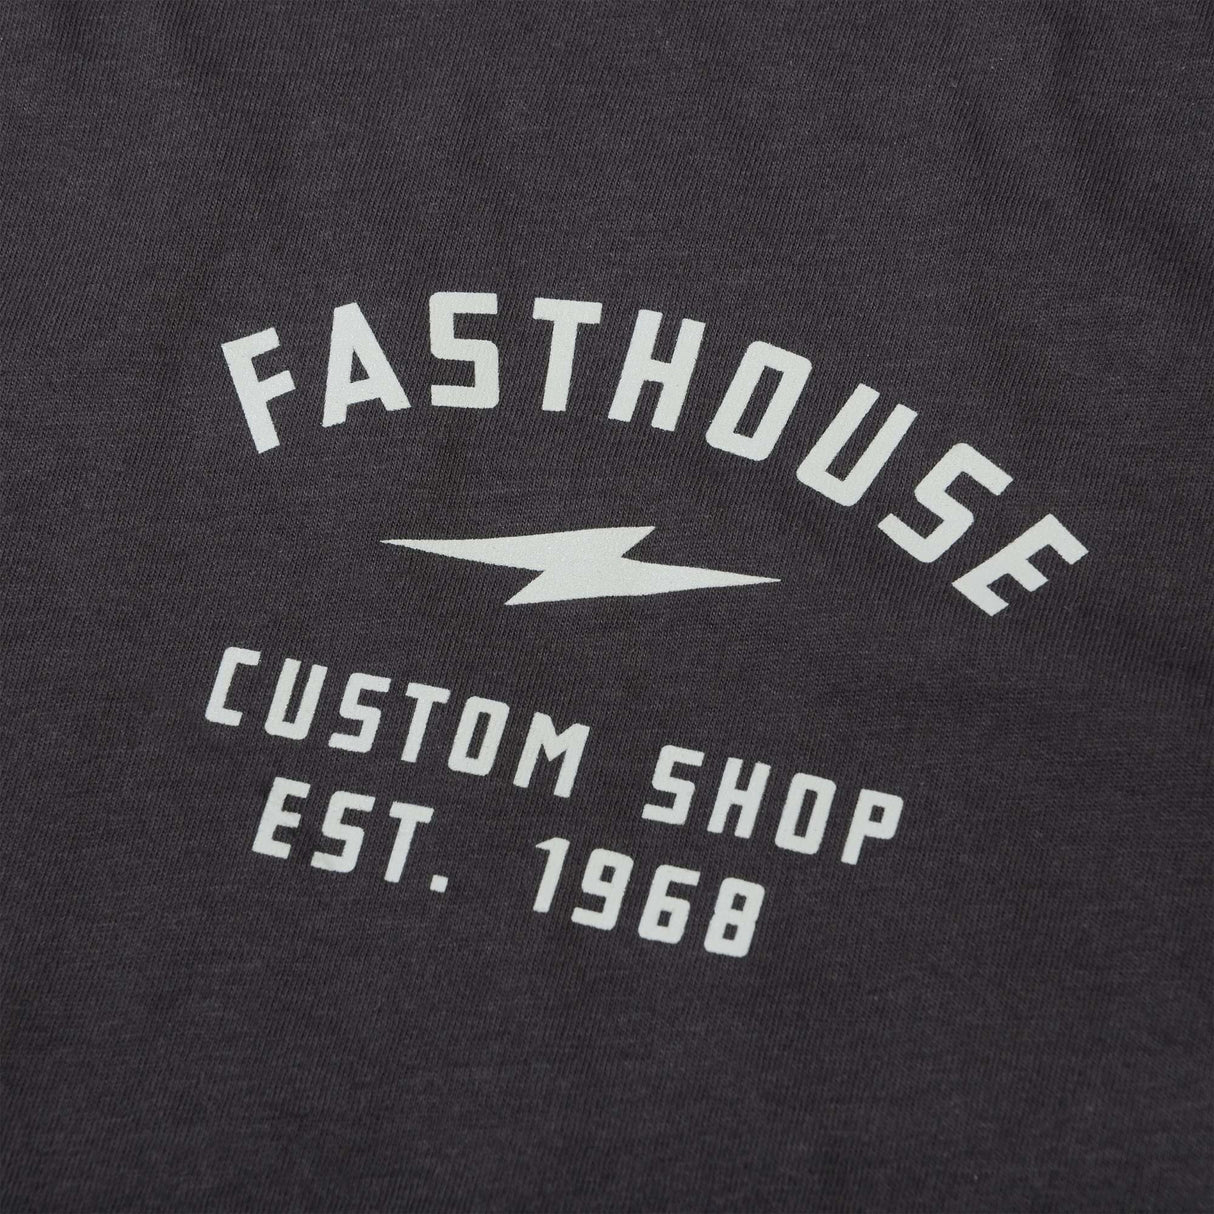 T-shirt fondamental Fasthouse